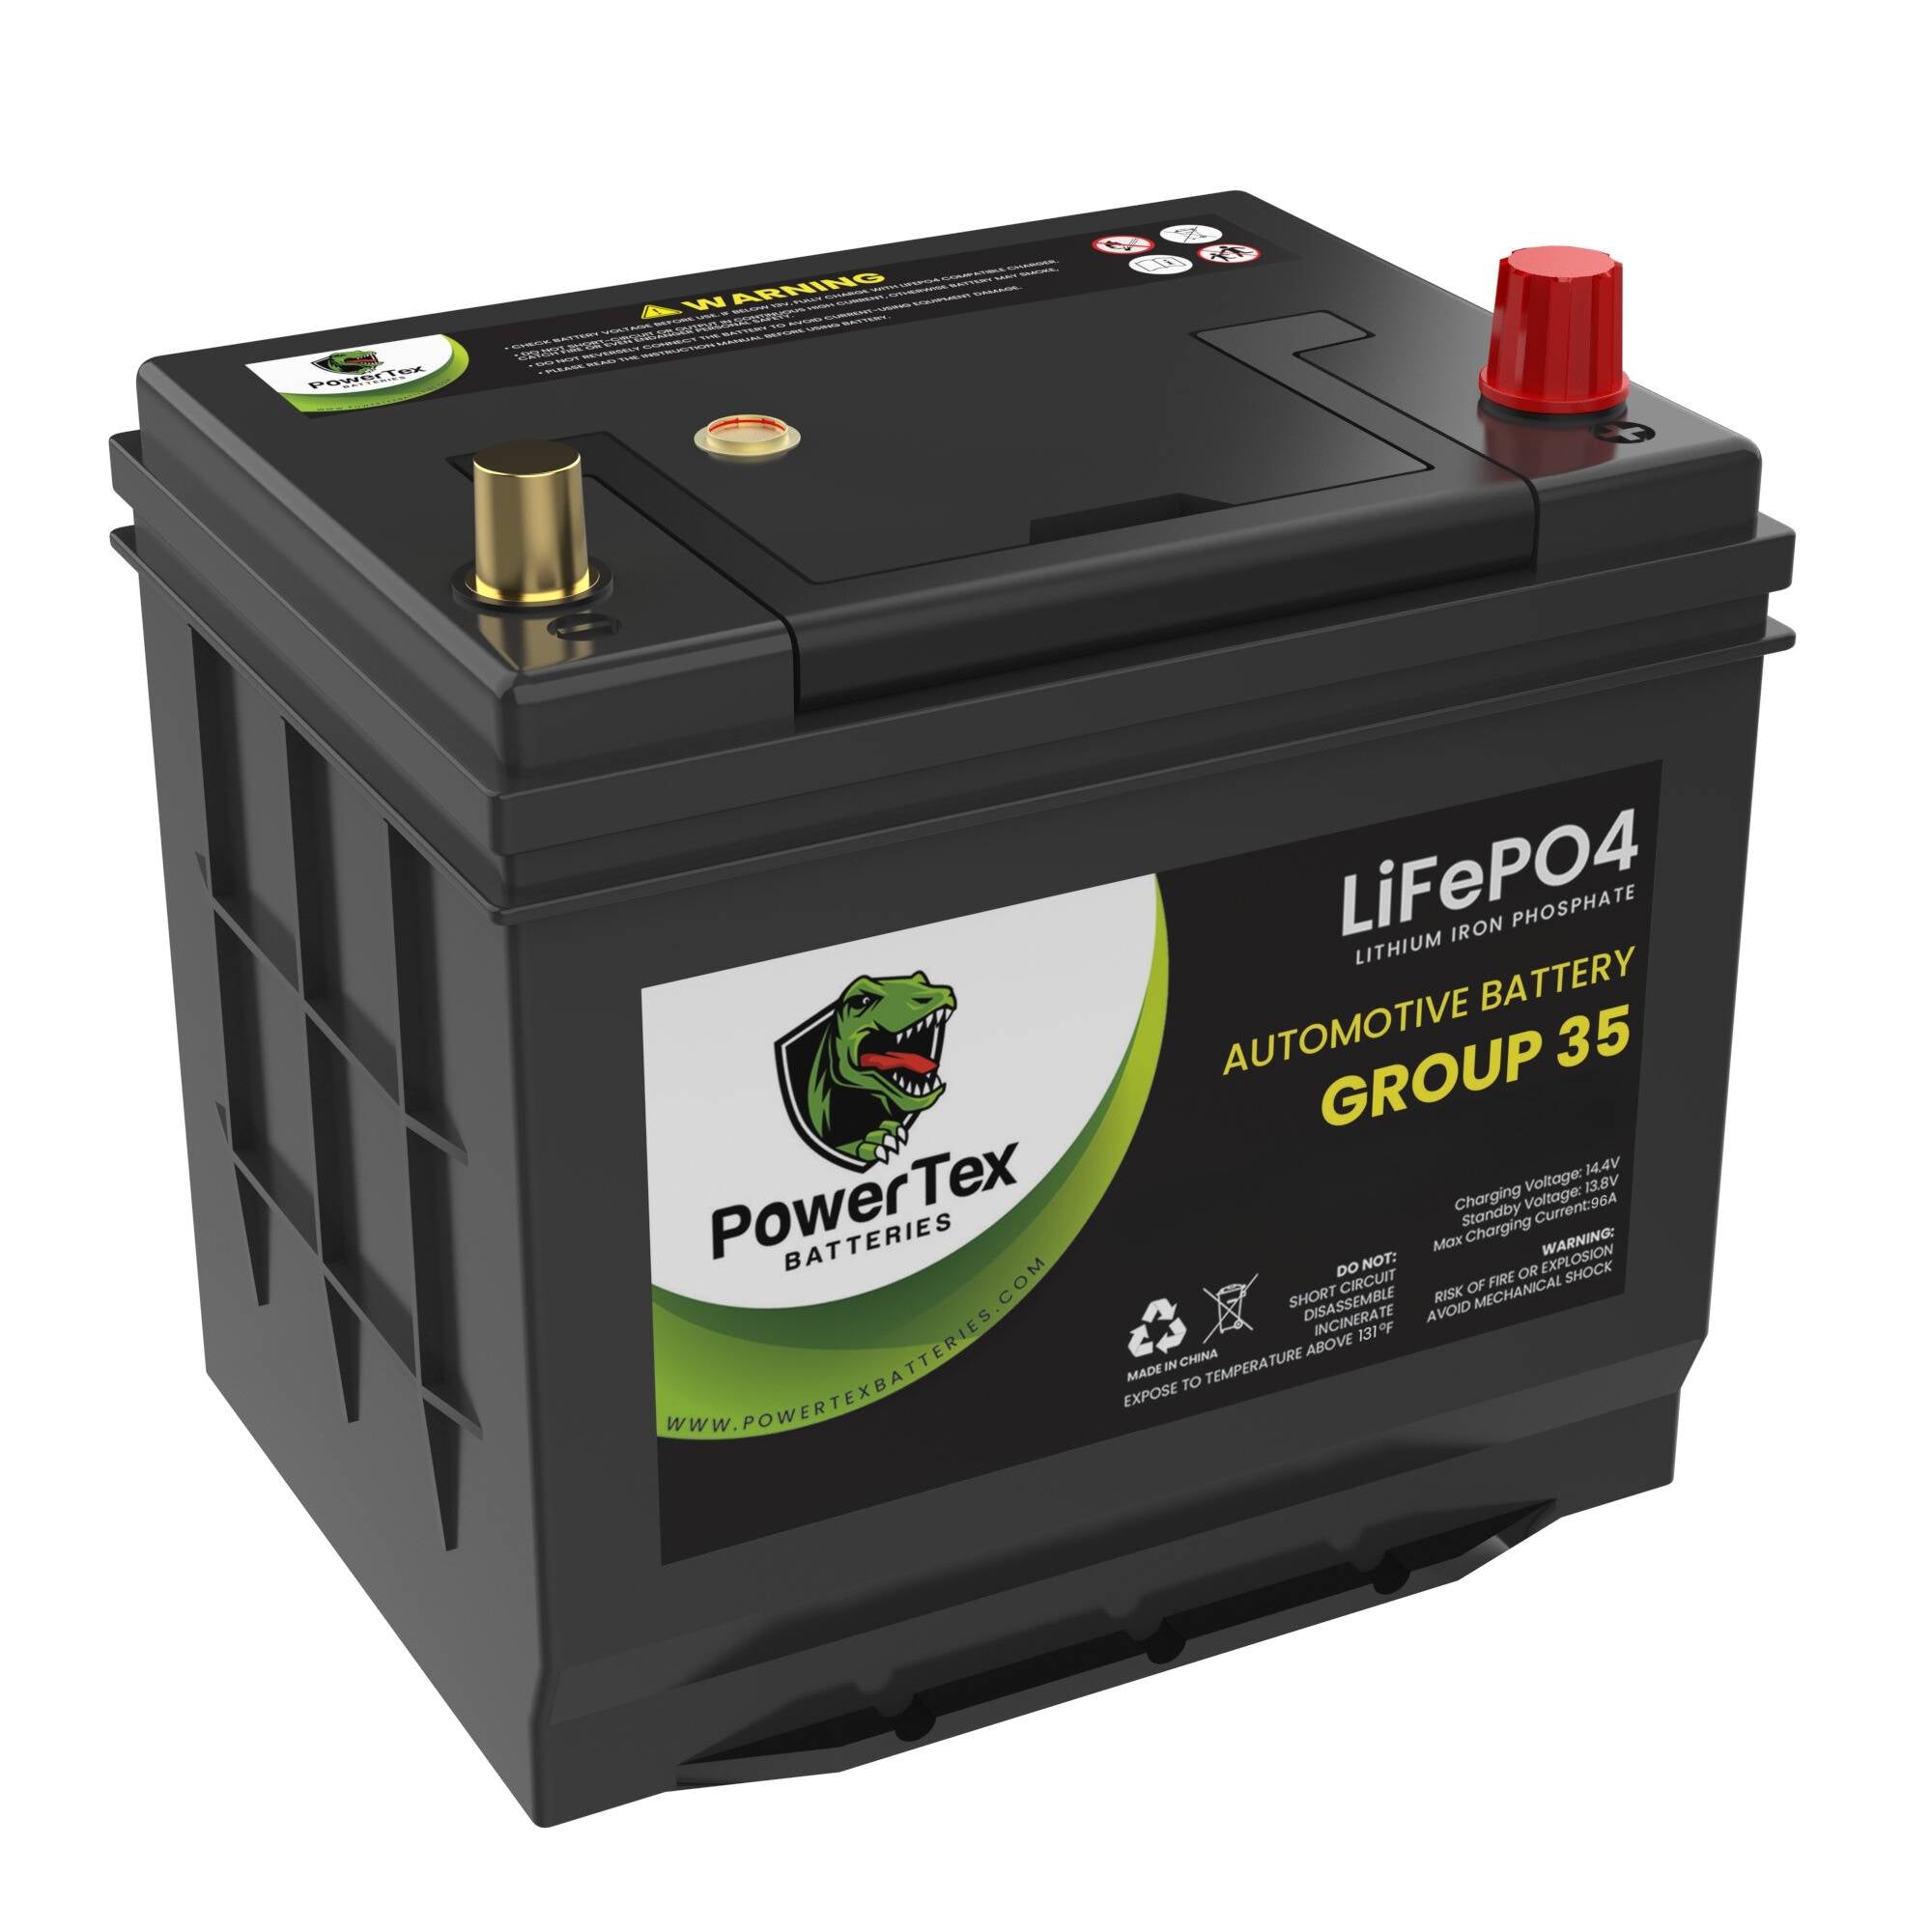 2014 Infiniti Q70 Car Battery BCI Group 35 / Q85 Lithium LiFePO4 Automotive Battery